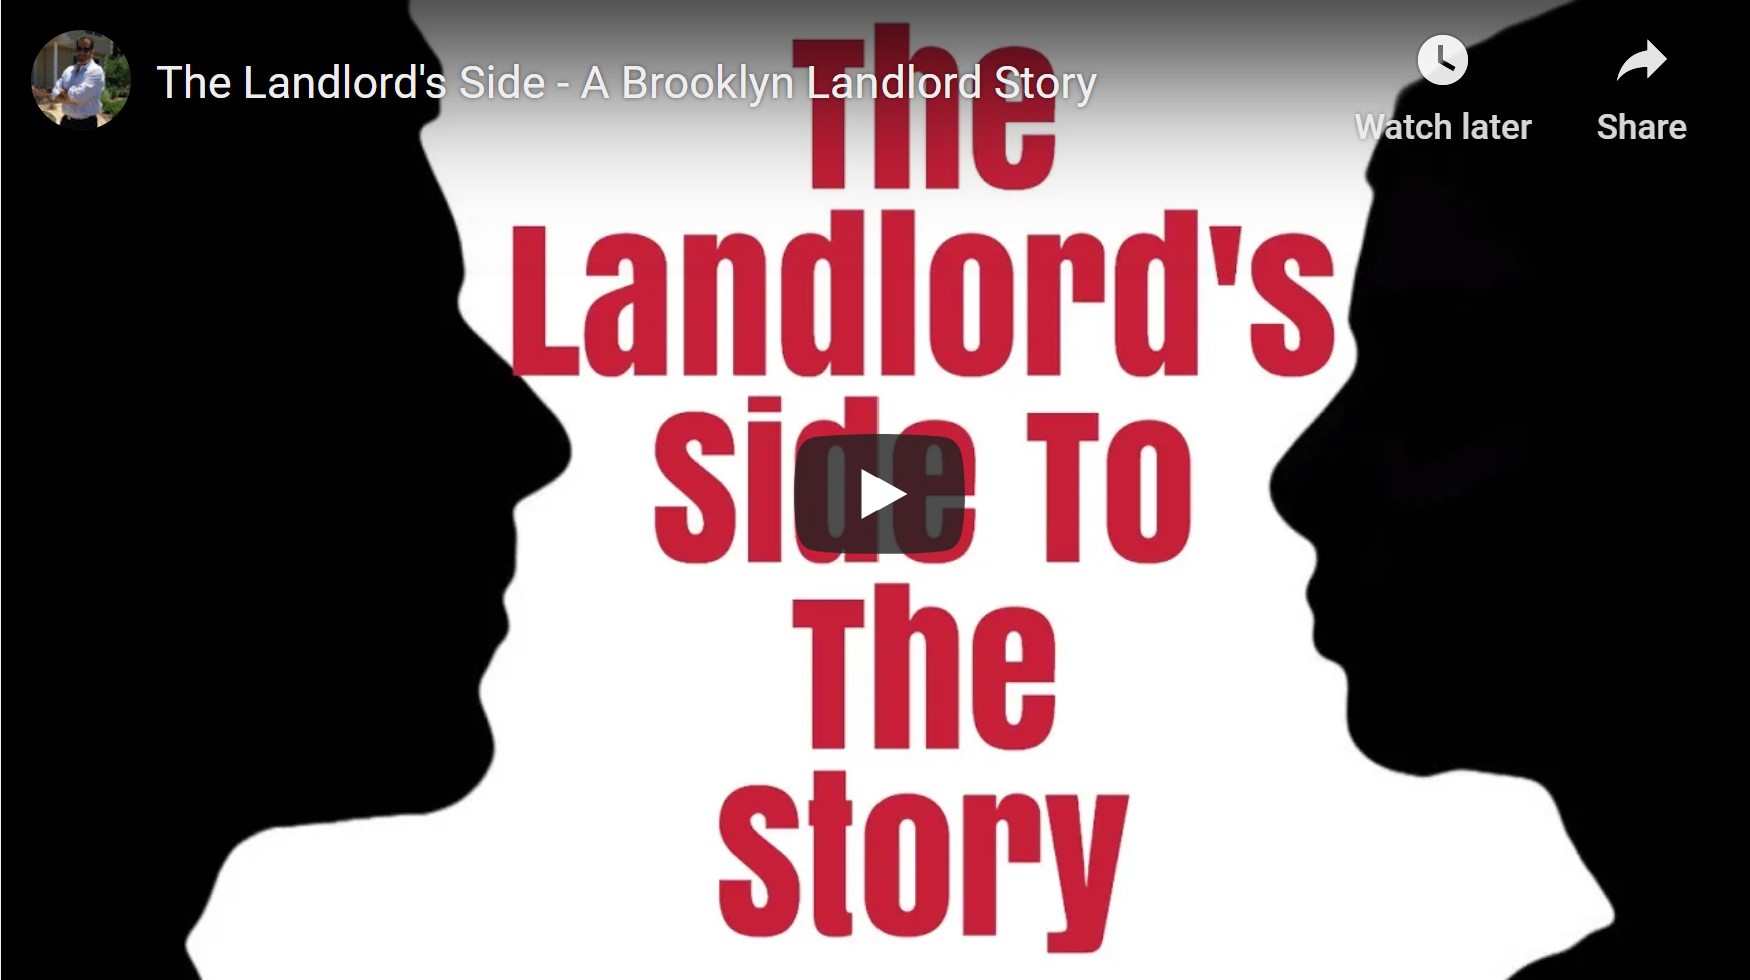 A Brooklyn Landlords Story